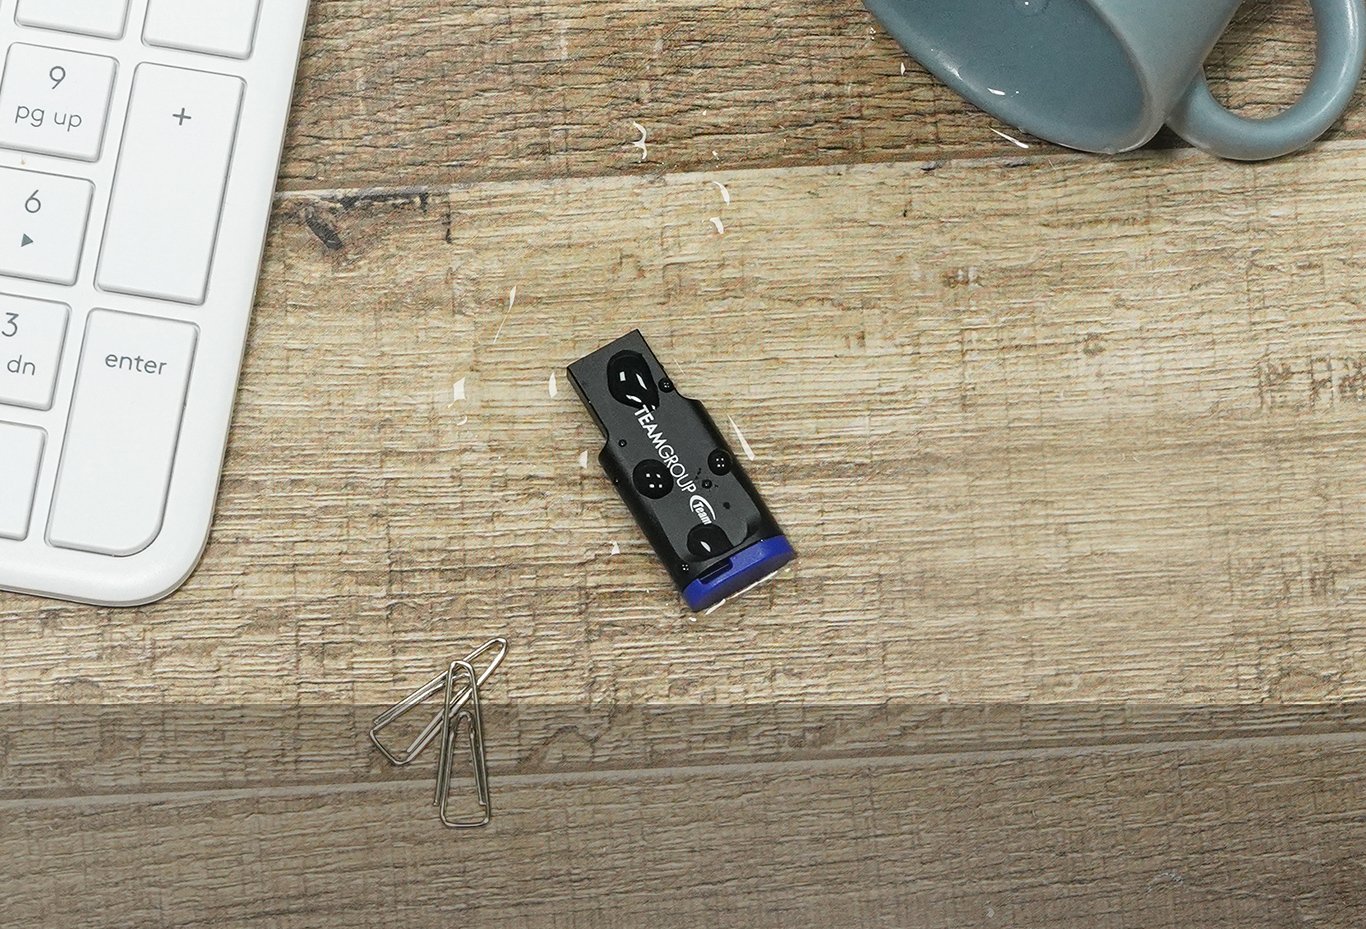  C221 USB Drive